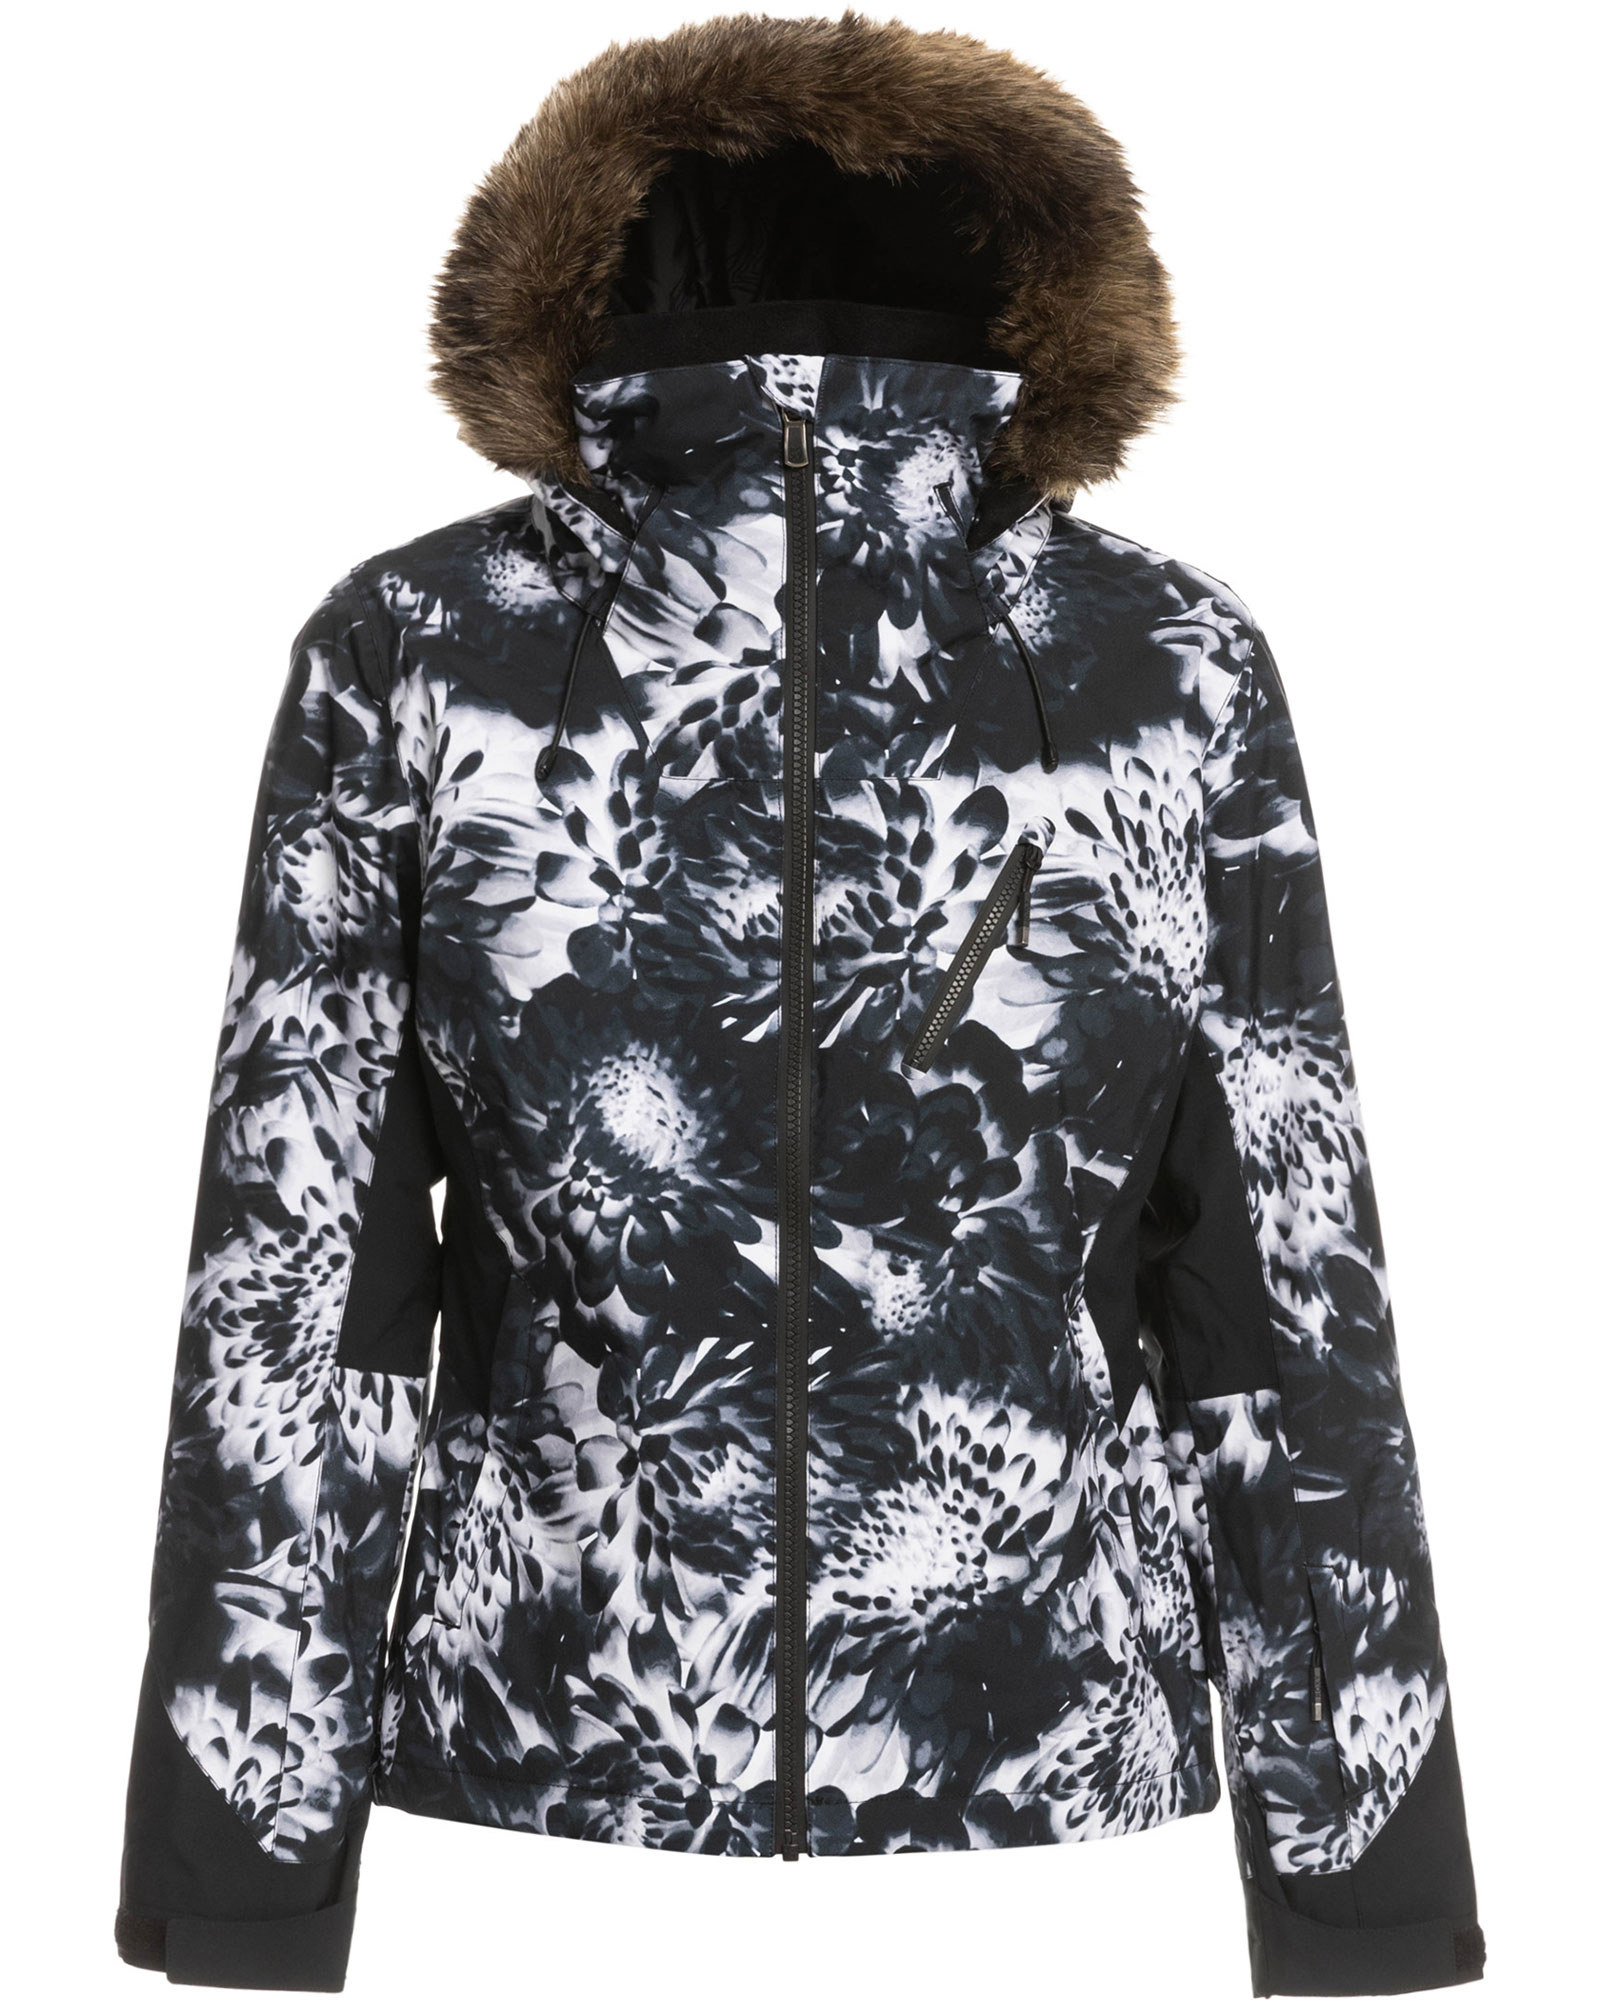 Roxy Jet Ski Premium Women’s Jacket - True Black Future Flower Print M